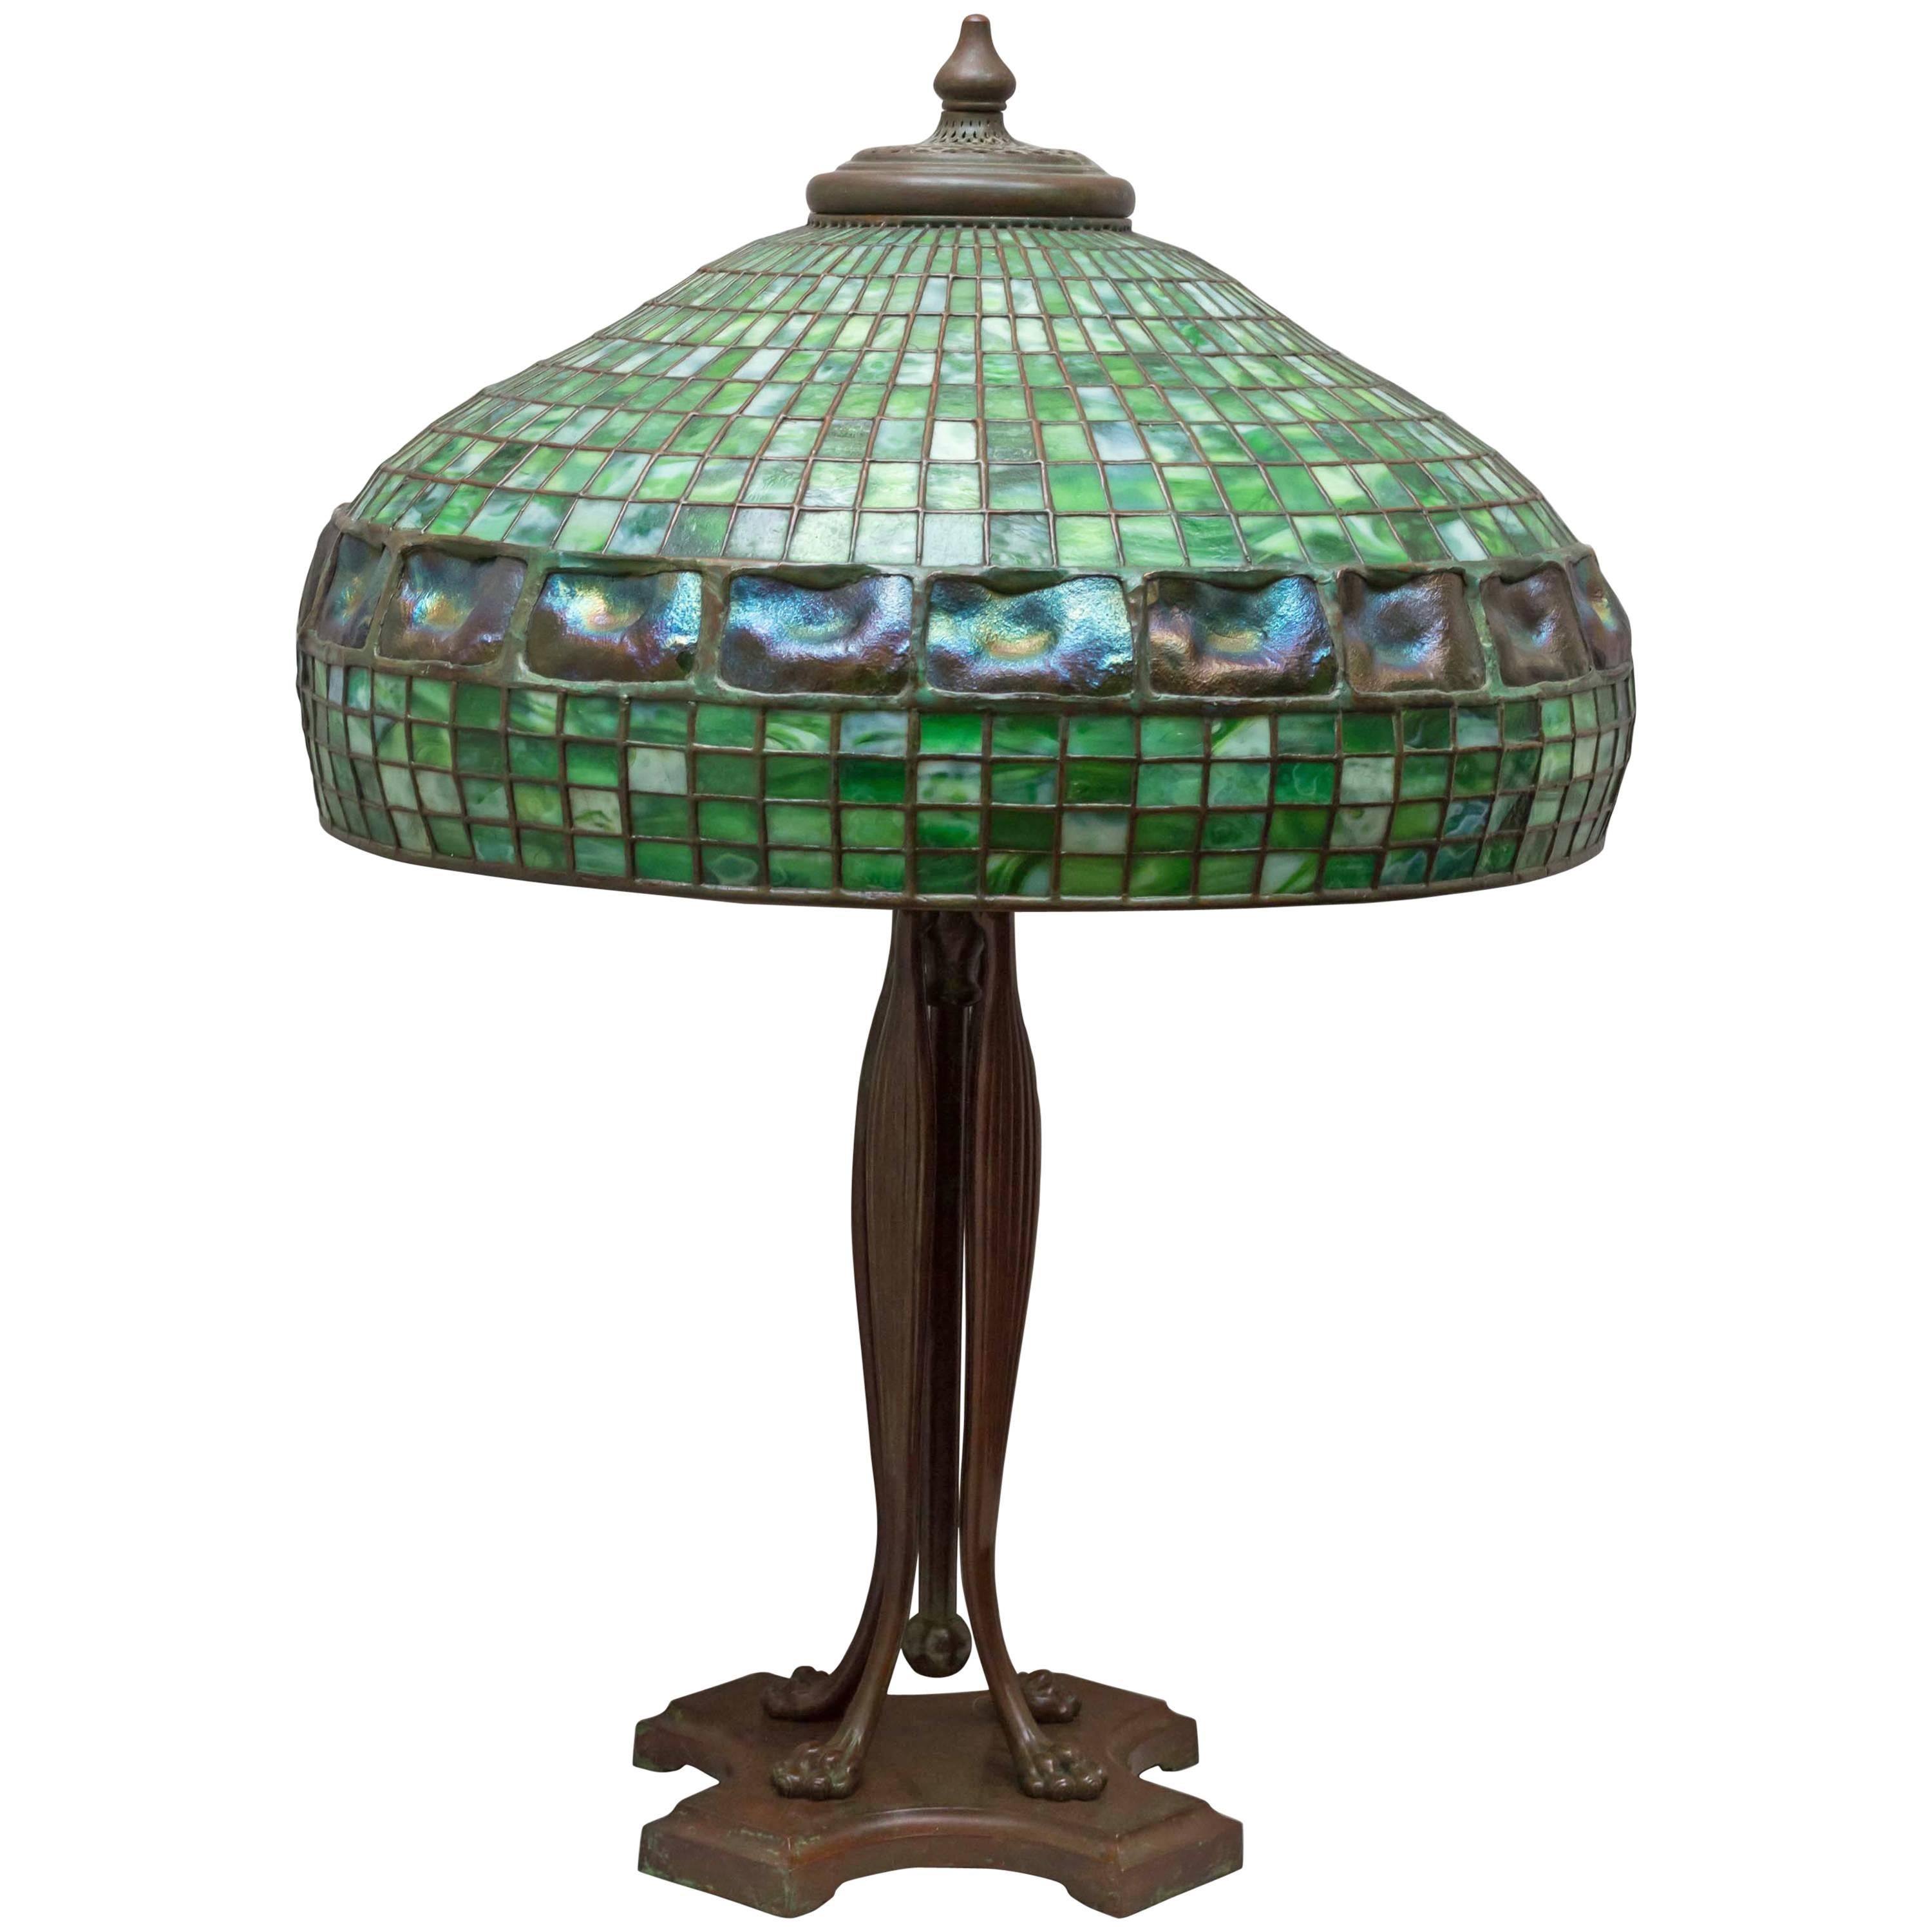 Tiffany Studios Turtle Back Tile Table Lamp